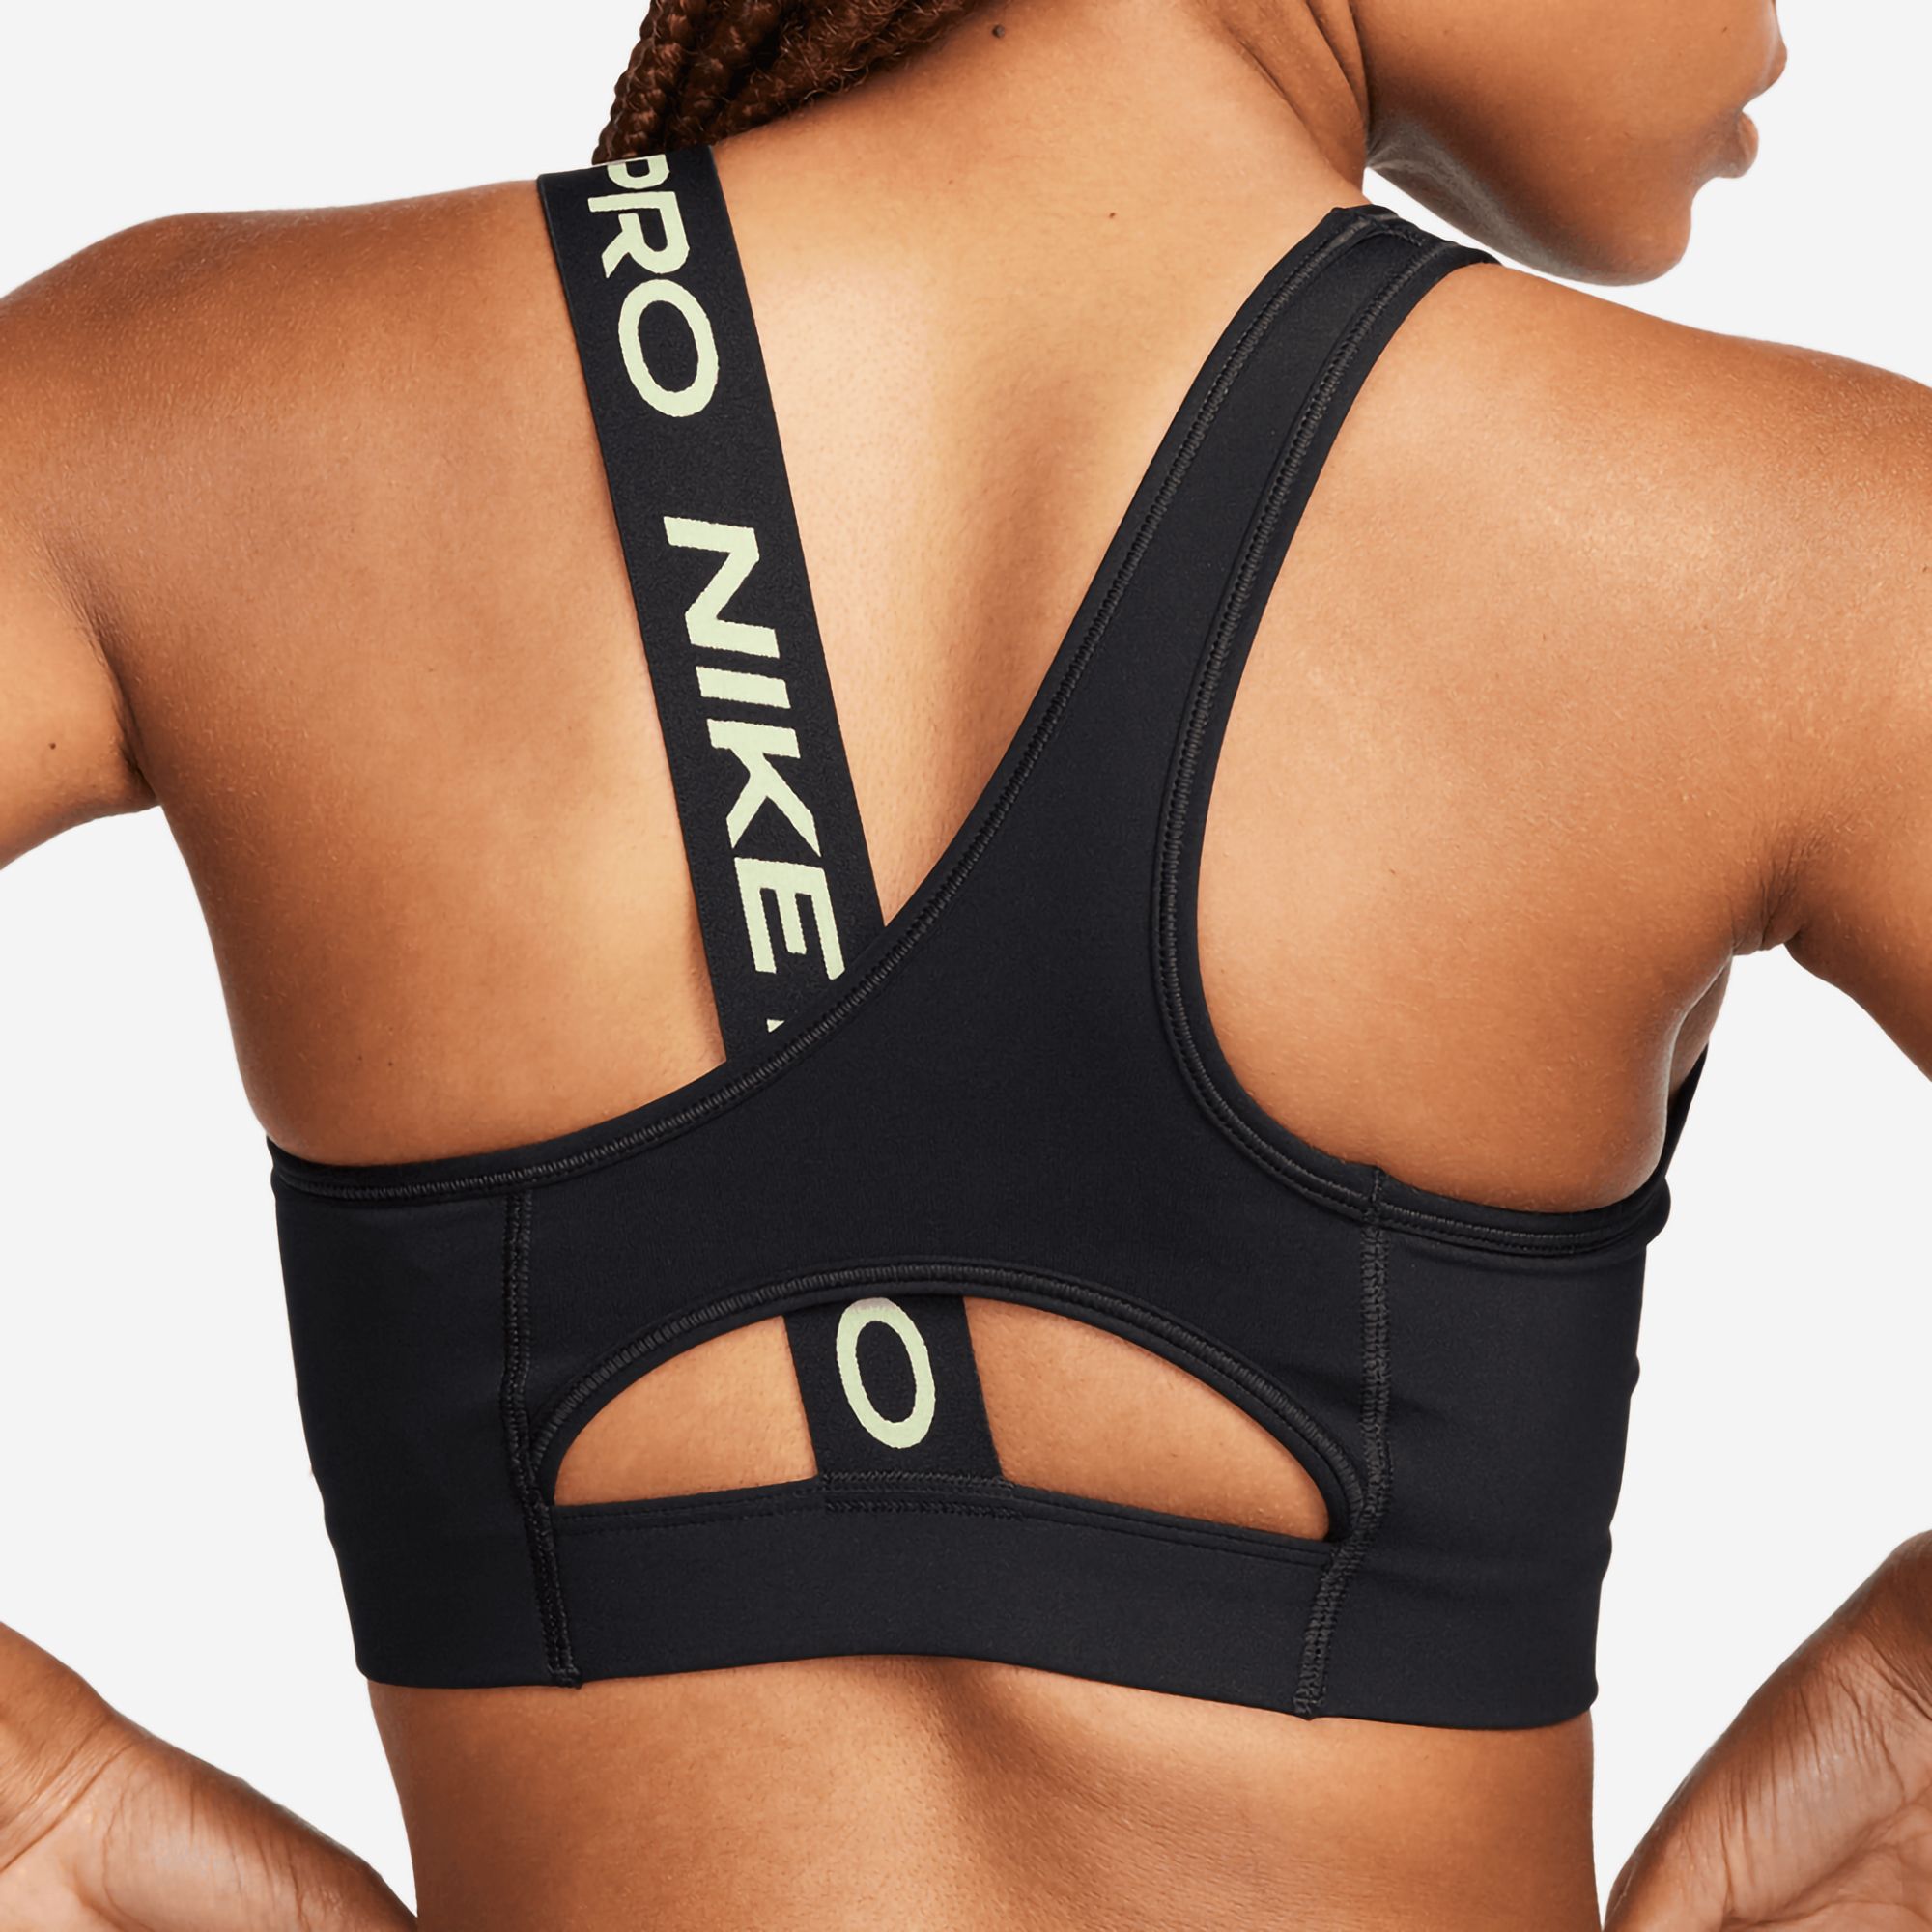 Nike Pro Training swoosh asymmetric sports bra in black and yellow